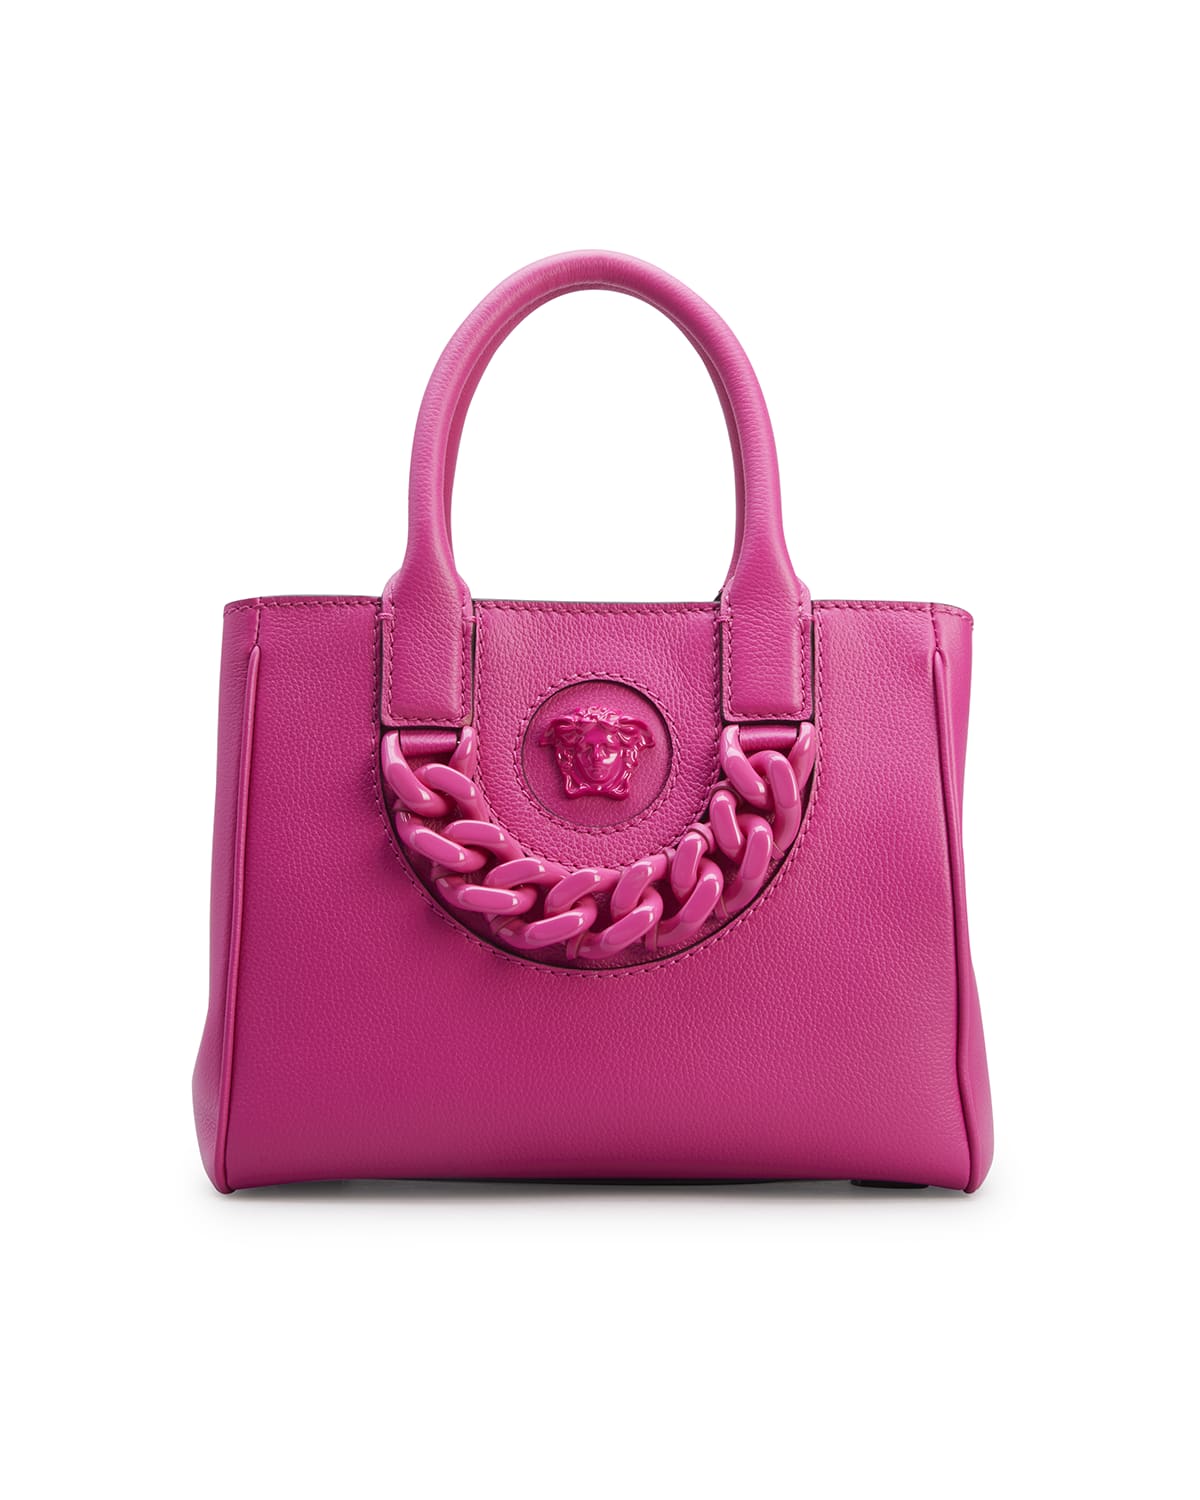 Versace La Medusa Small Chain Tote Bag In Hot Pink